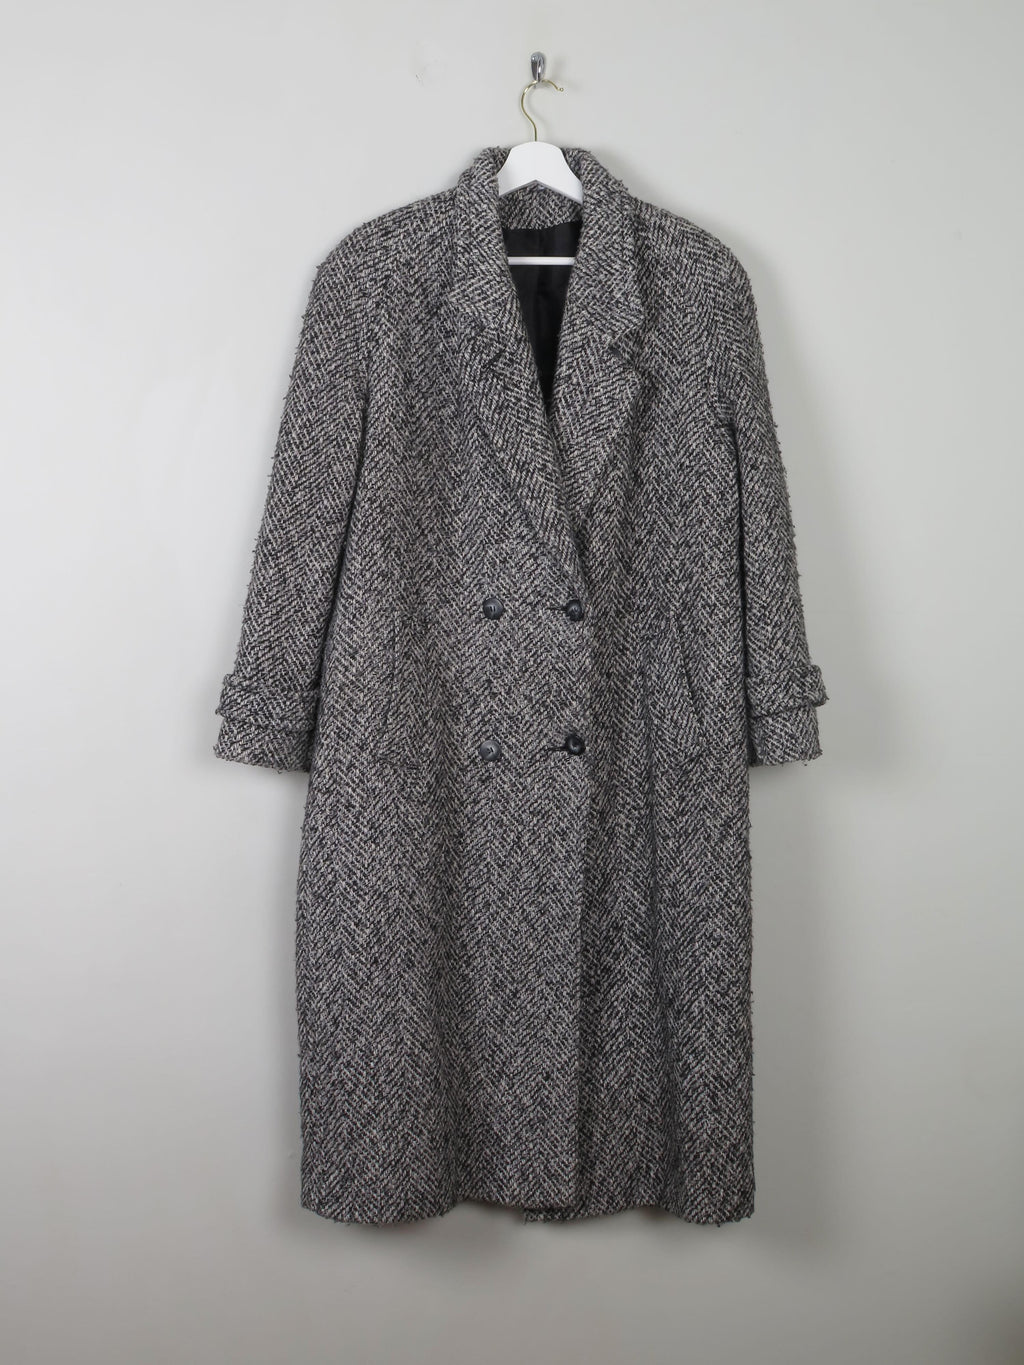 Women's Vintage Tweed Coat Black & White M/L - The Harlequin